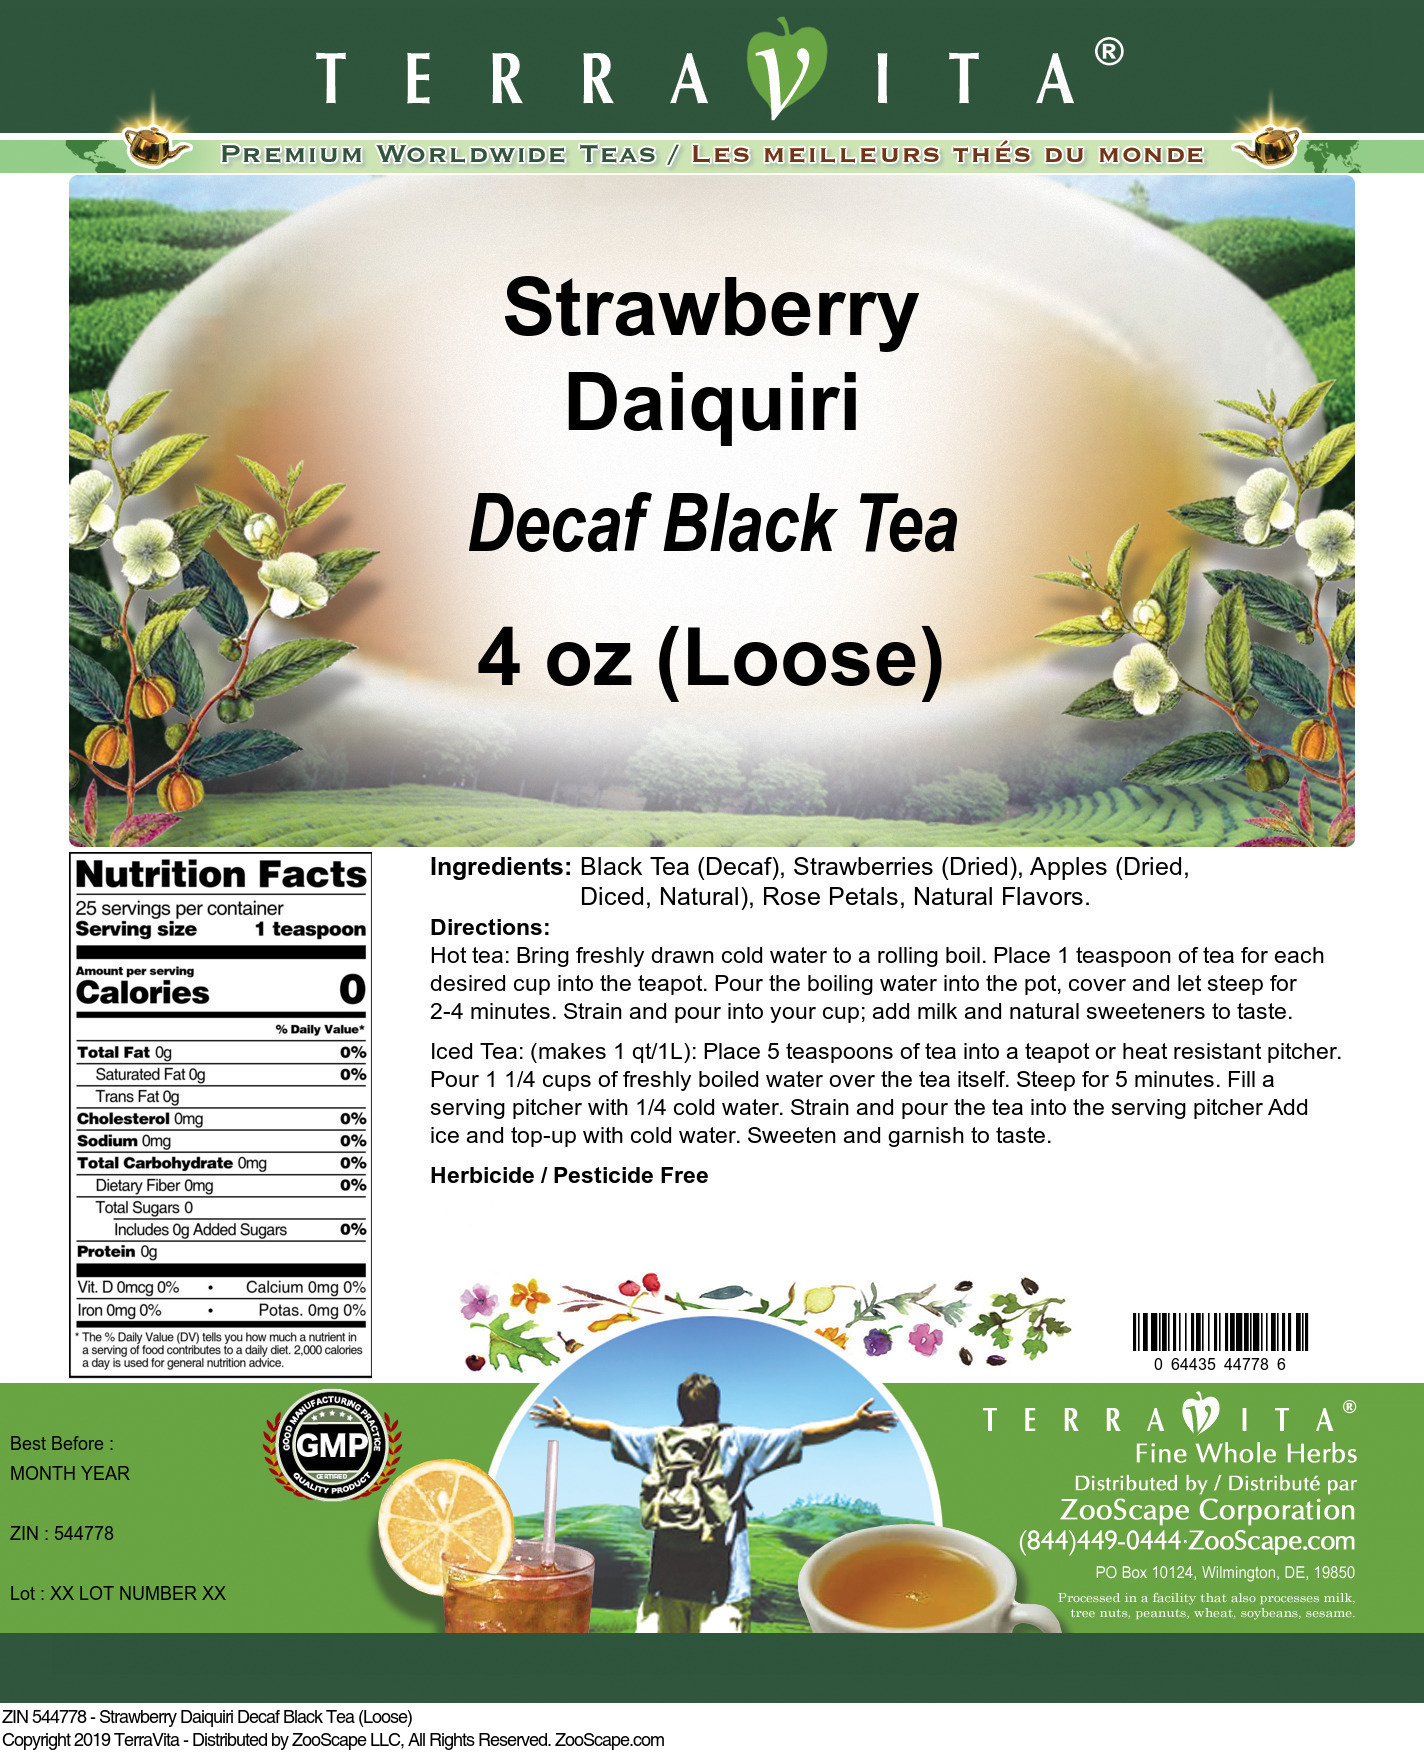 Strawberry Daiquiri Decaf Black Tea (Loose) - Label